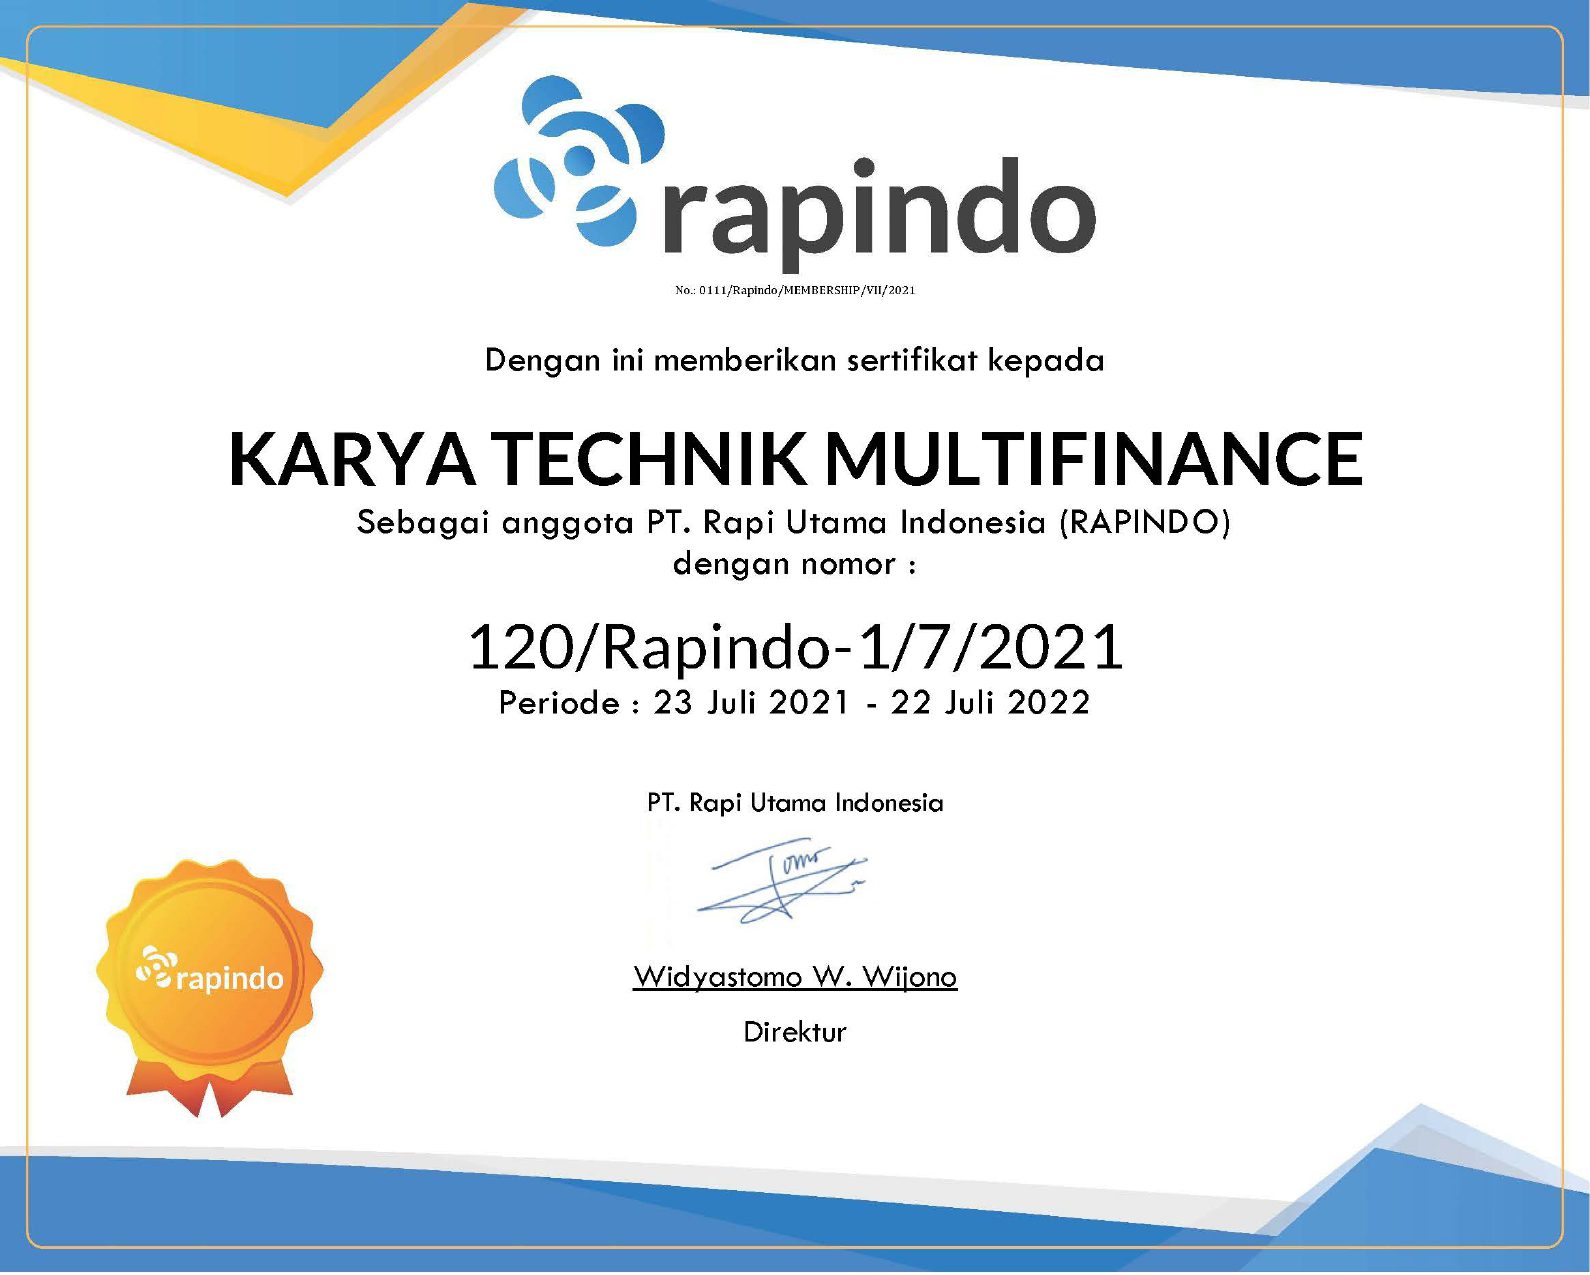 Karya Technik Multifinance Awarded Honorable Certificate from RAPINDO